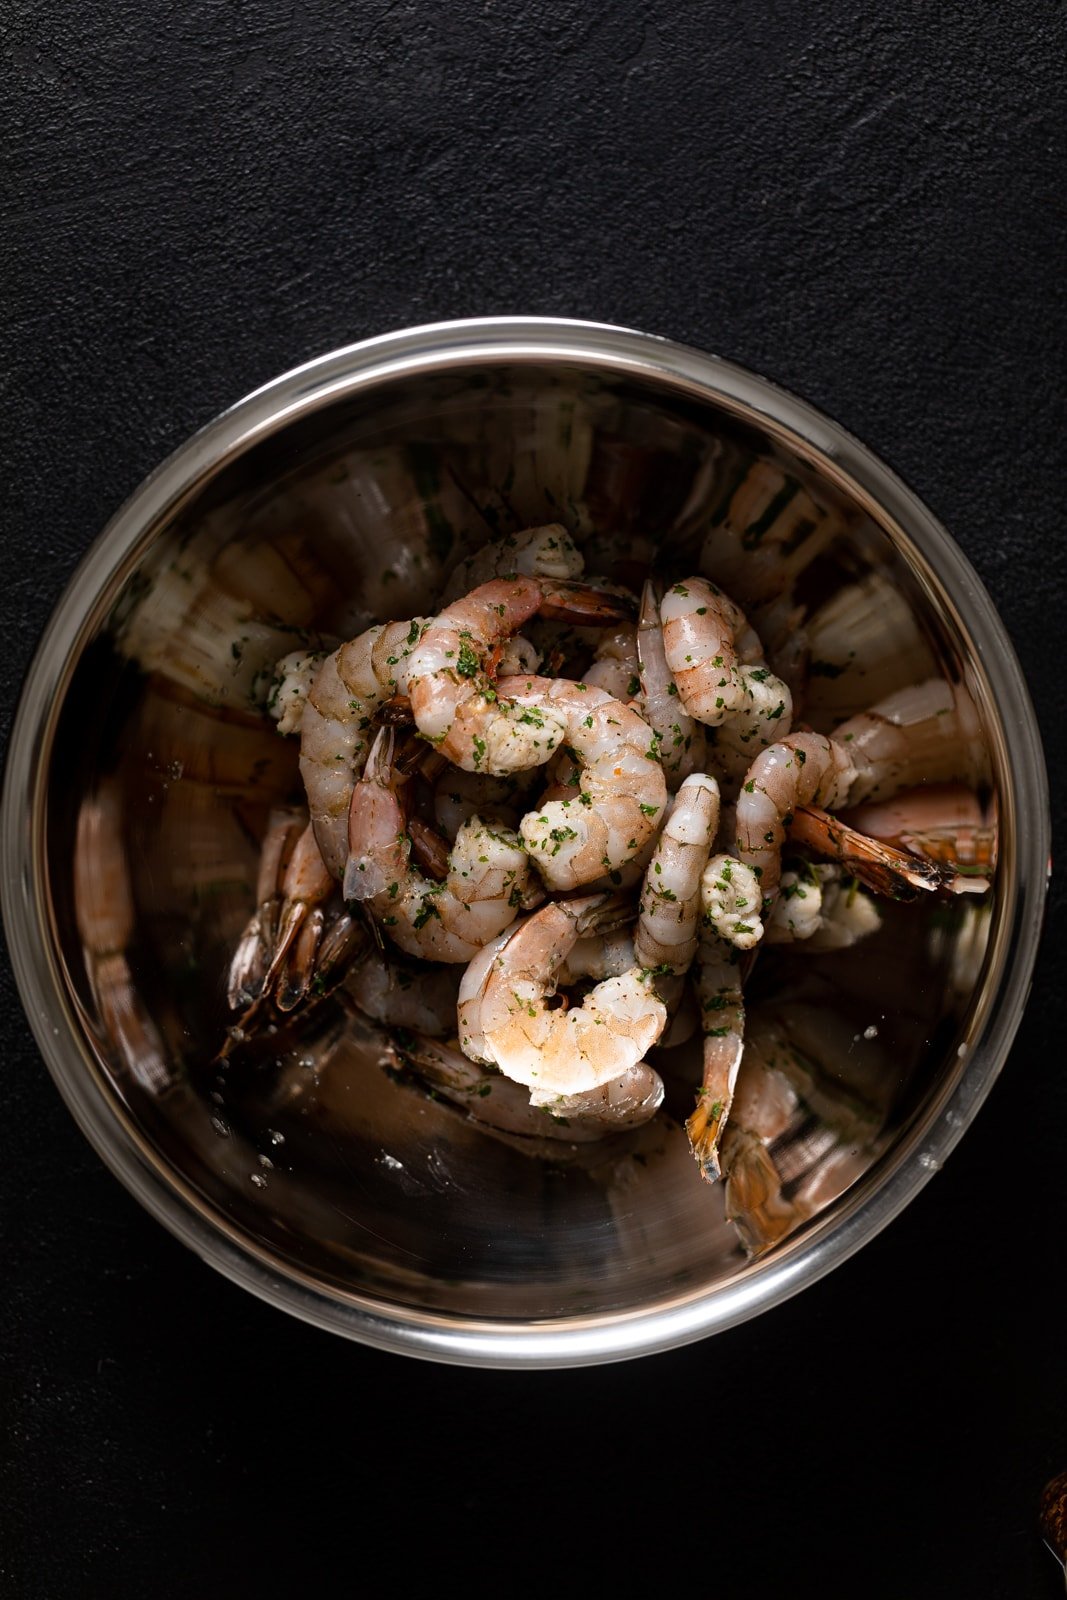 Raw, seasoned shrimp in a bowl